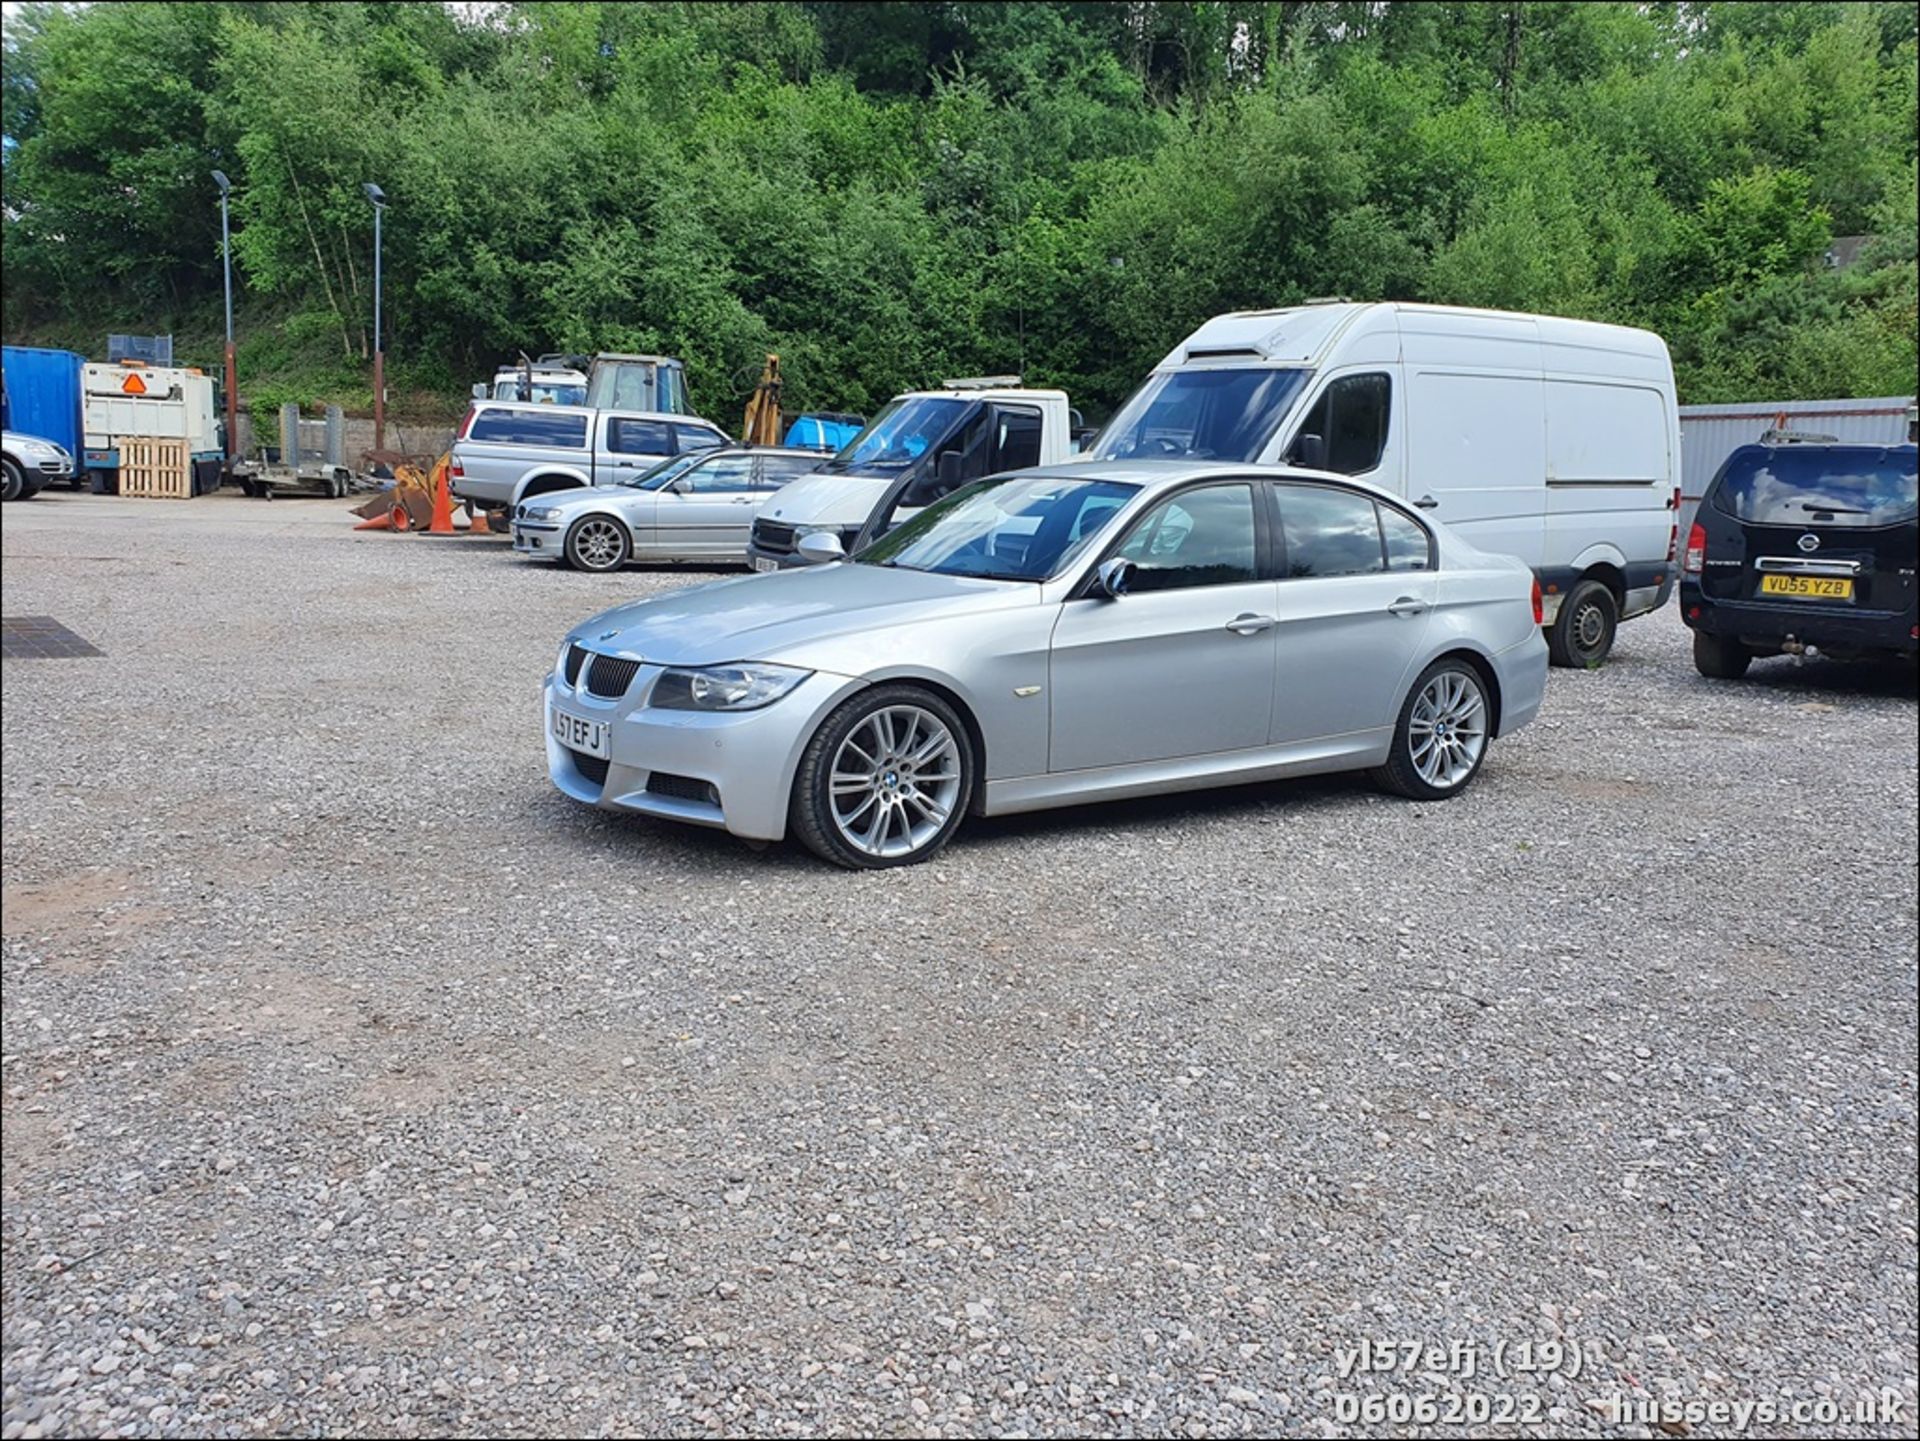 08/57 BMW 330D M SPORT AUTO - 2993cc 4dr Saloon (Silver) - Image 19 of 40